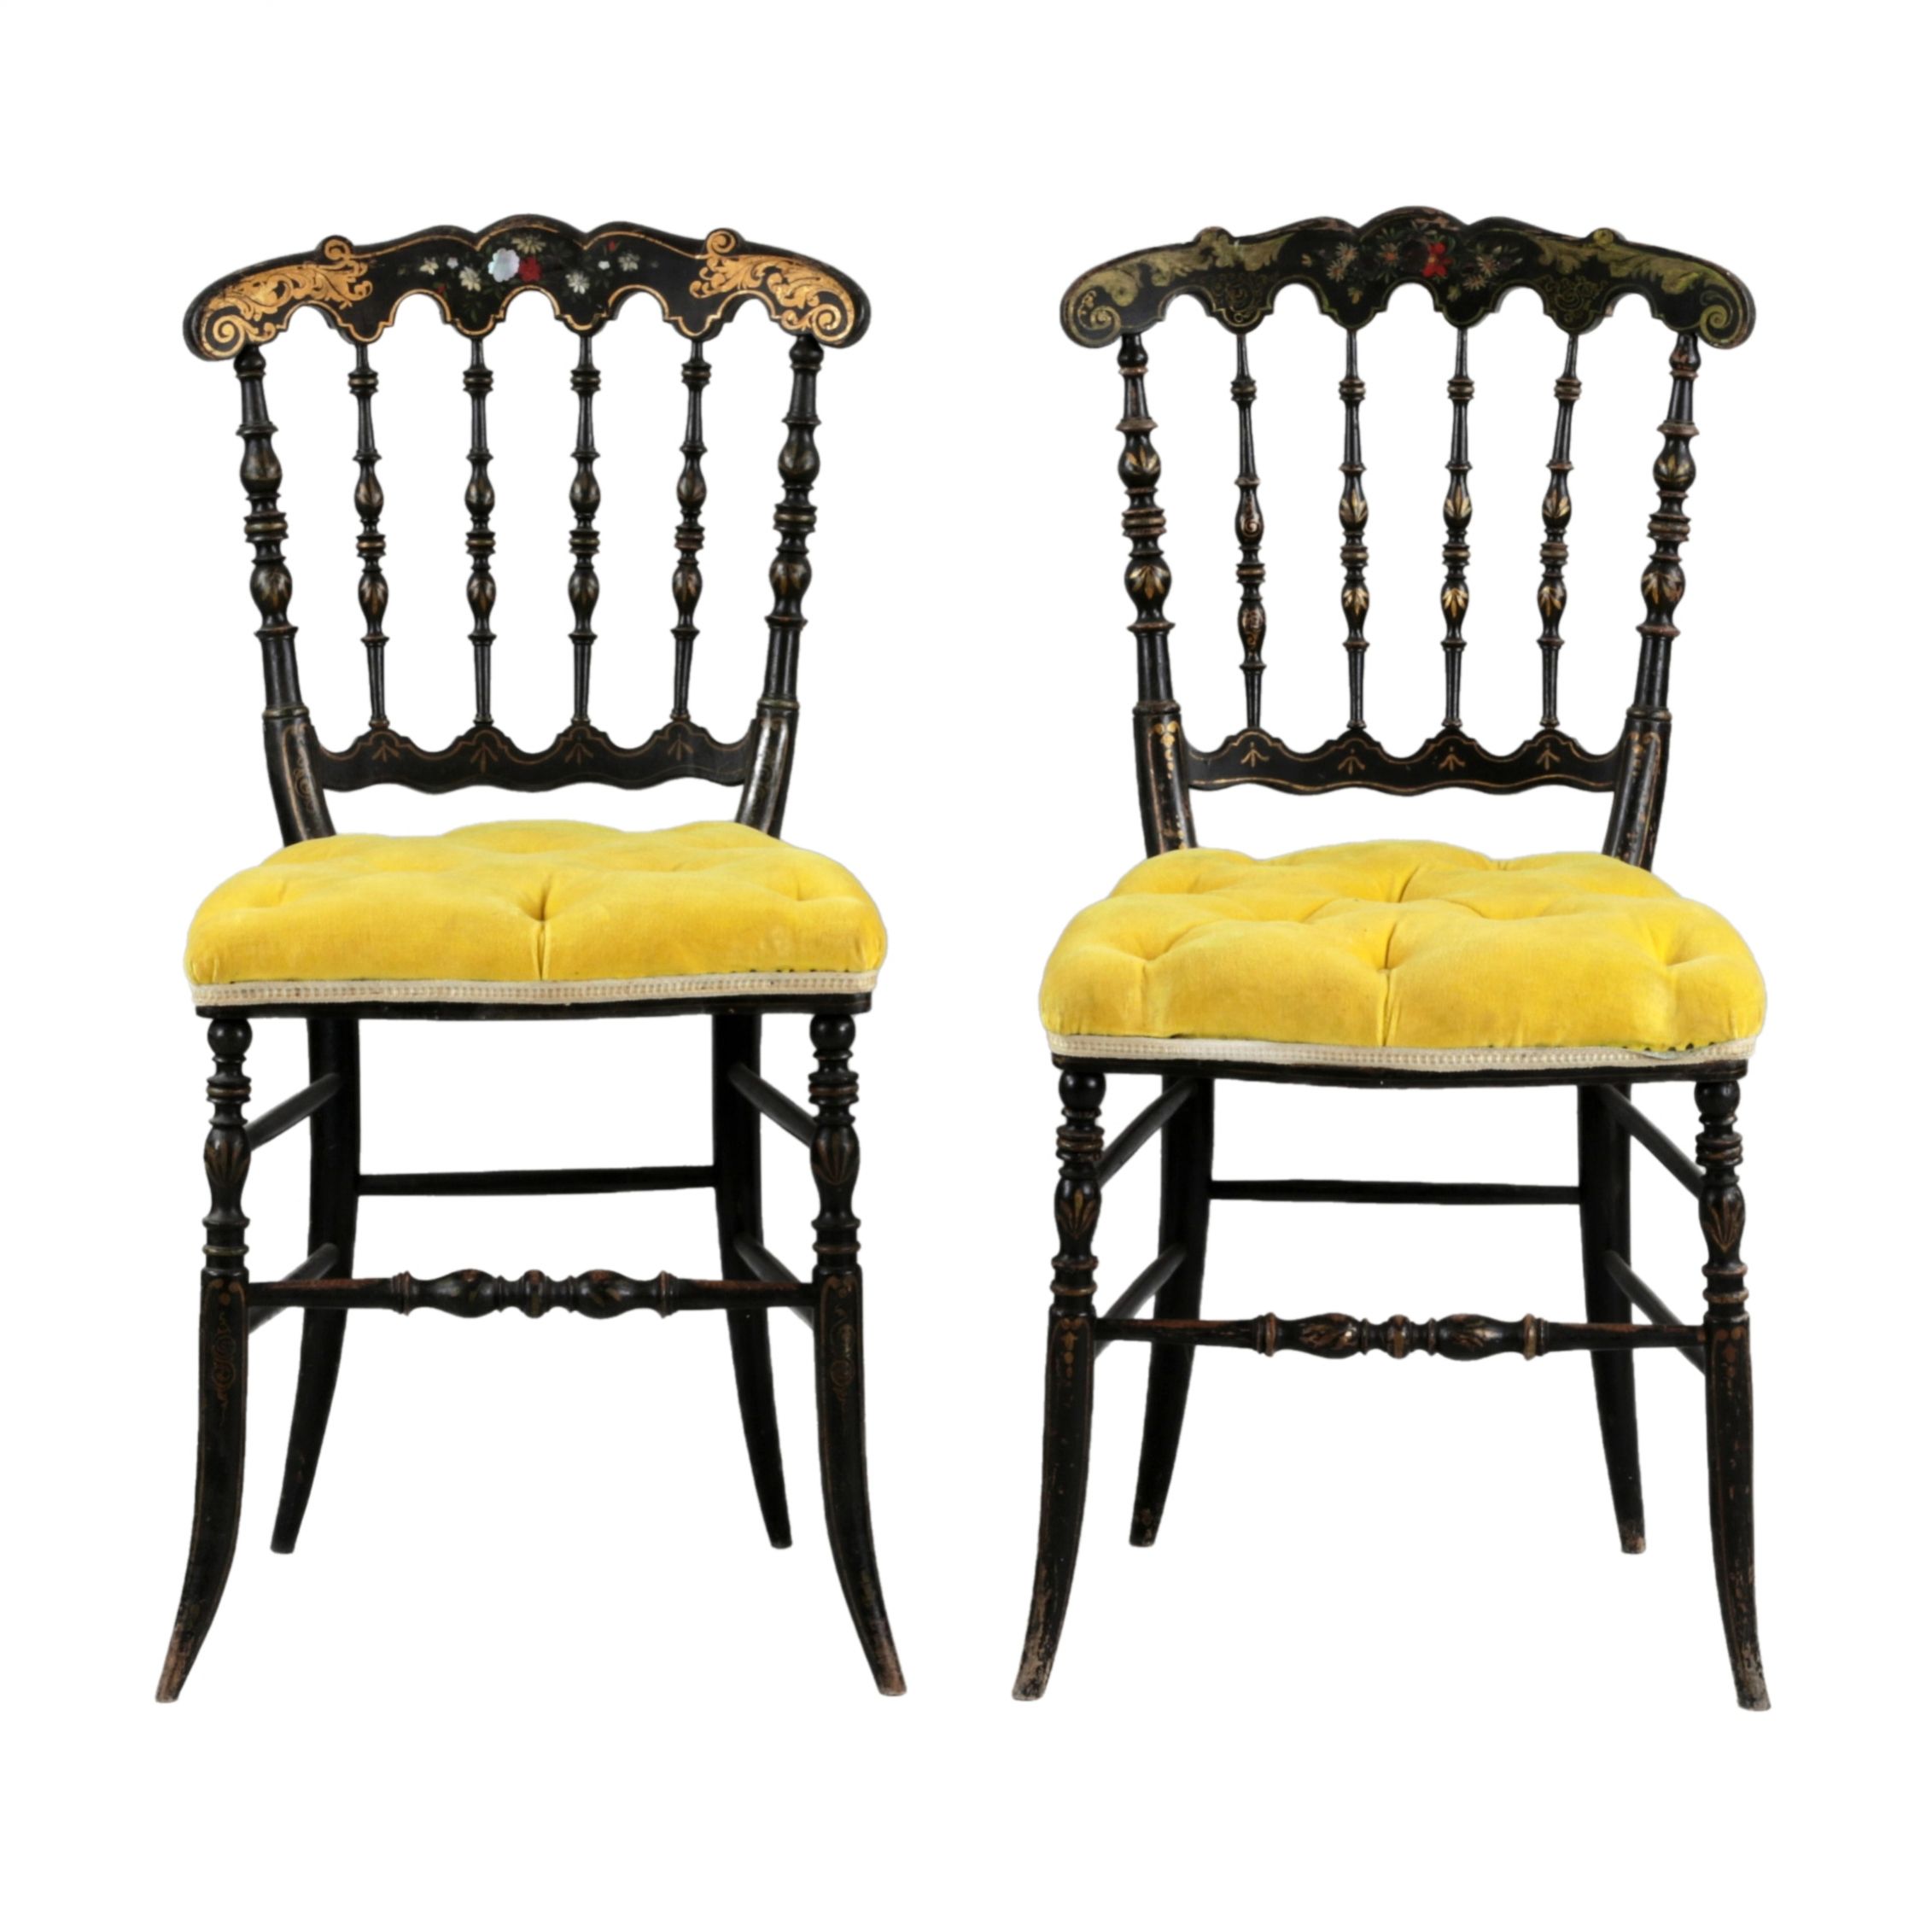 Pair-of-Napoleon-III-style-chairs-19th-century-